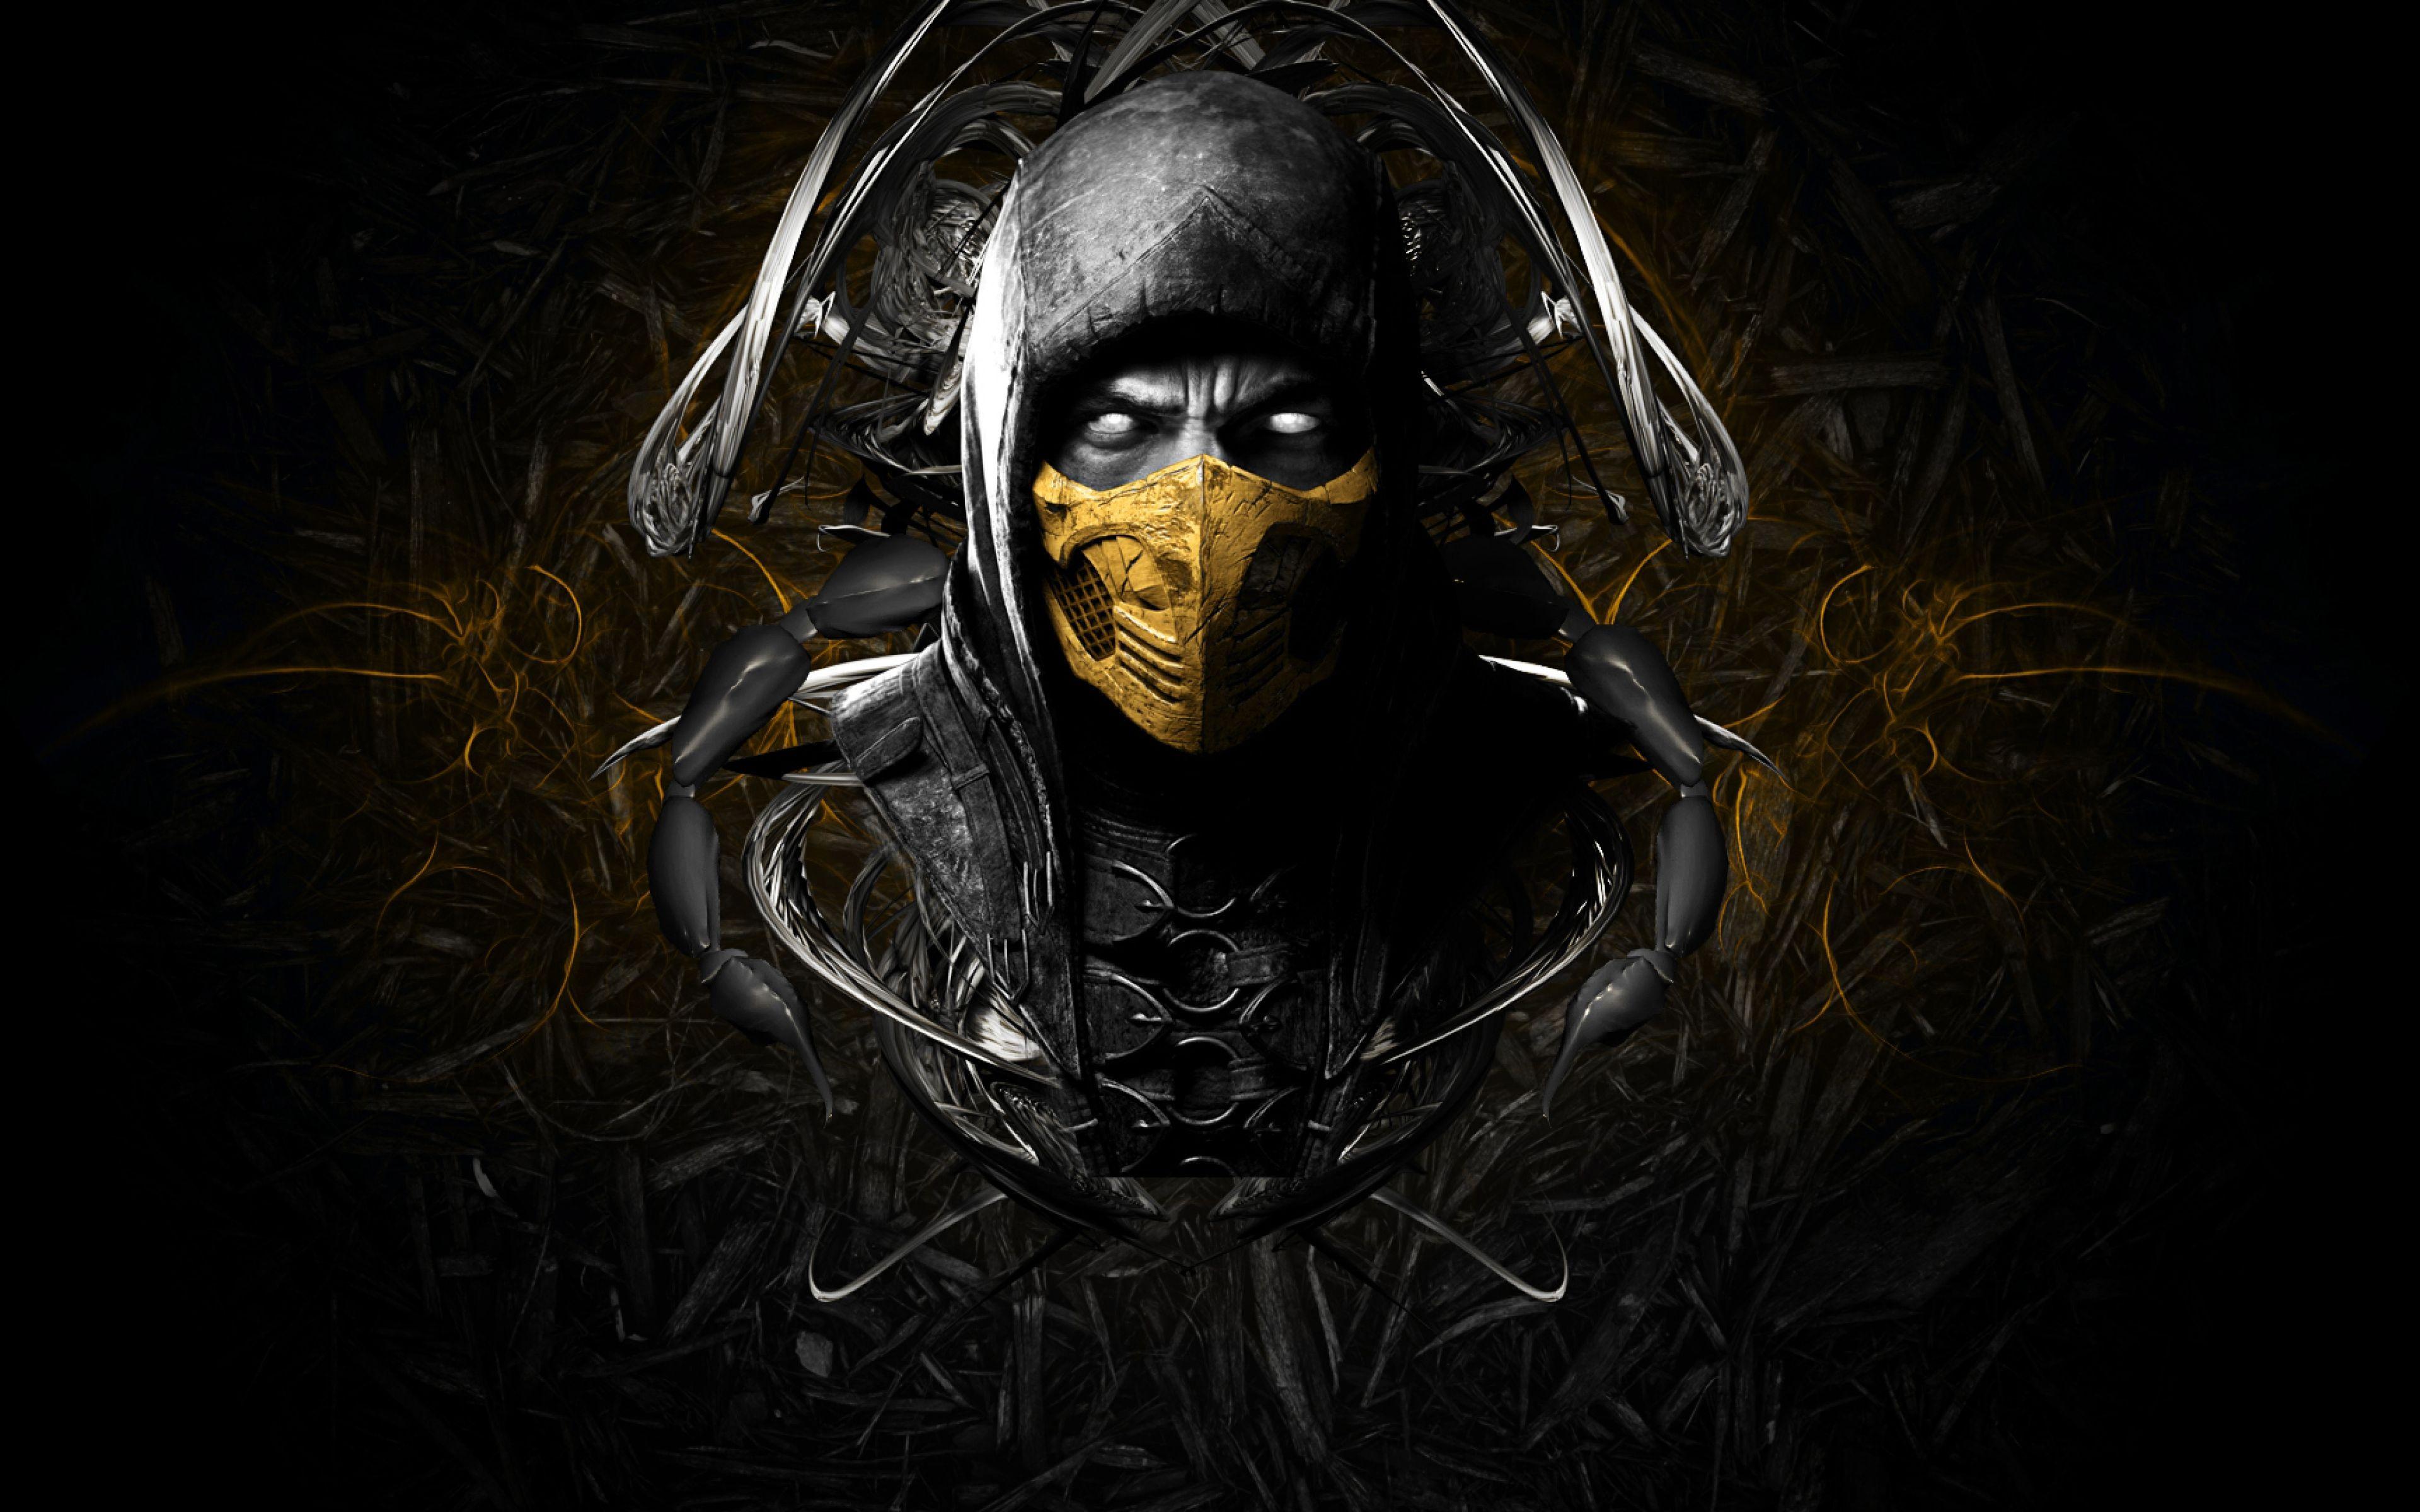 Raiden of Mortal Kombat Wallpaper 4k HD ID:3029